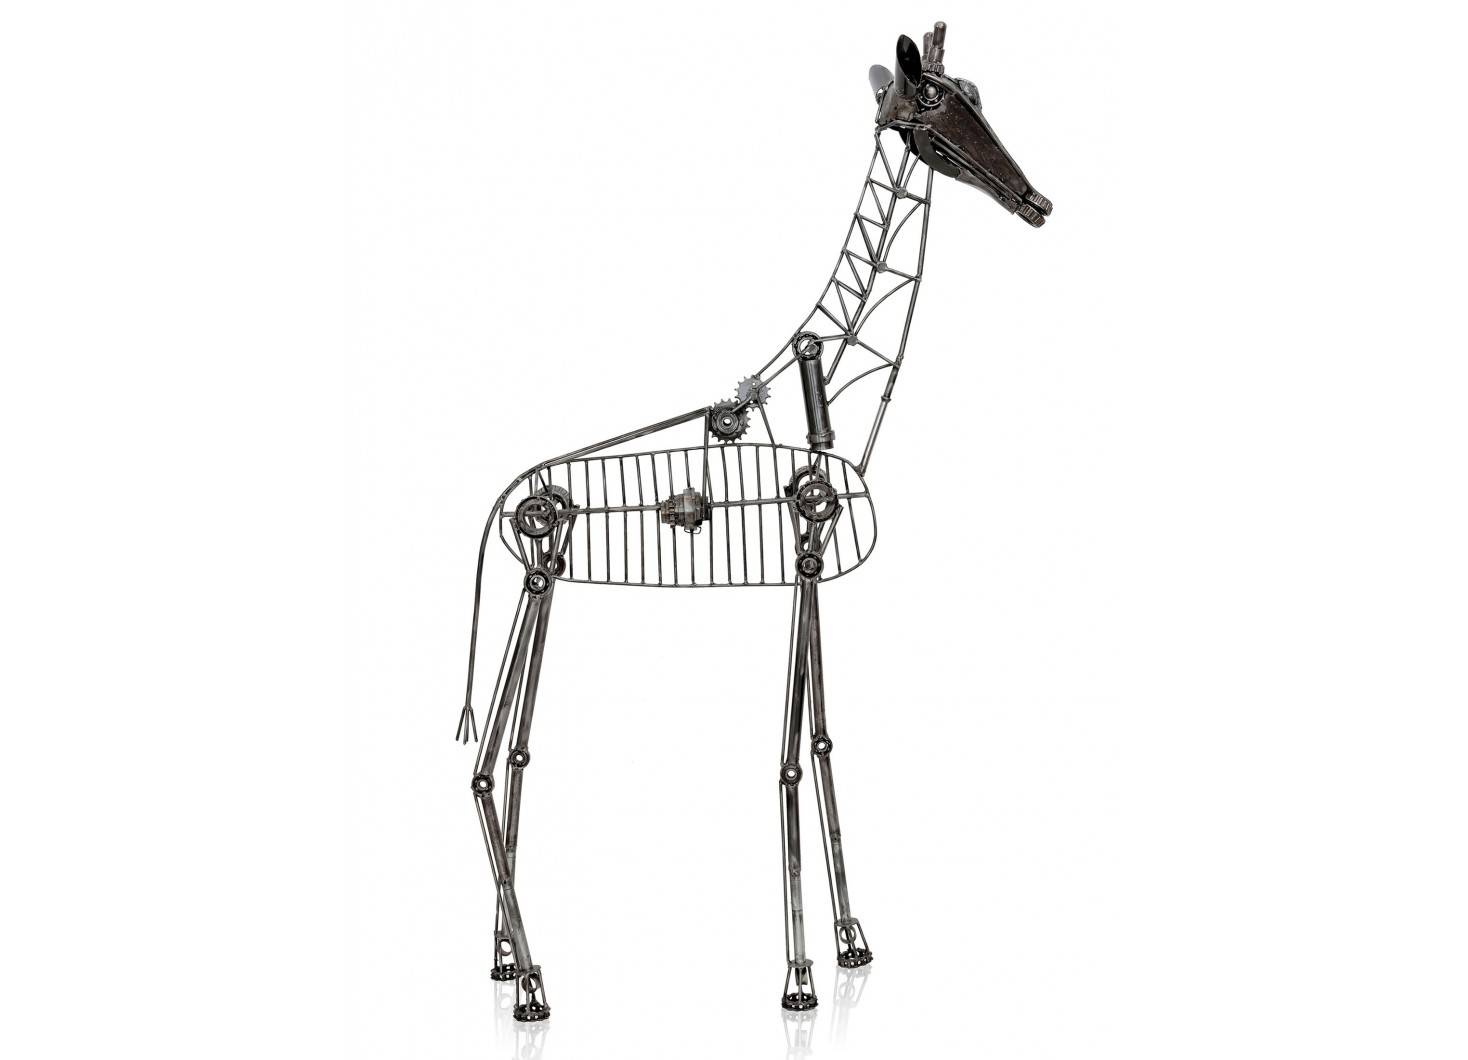 Sculpture de girafe en métal récupéré